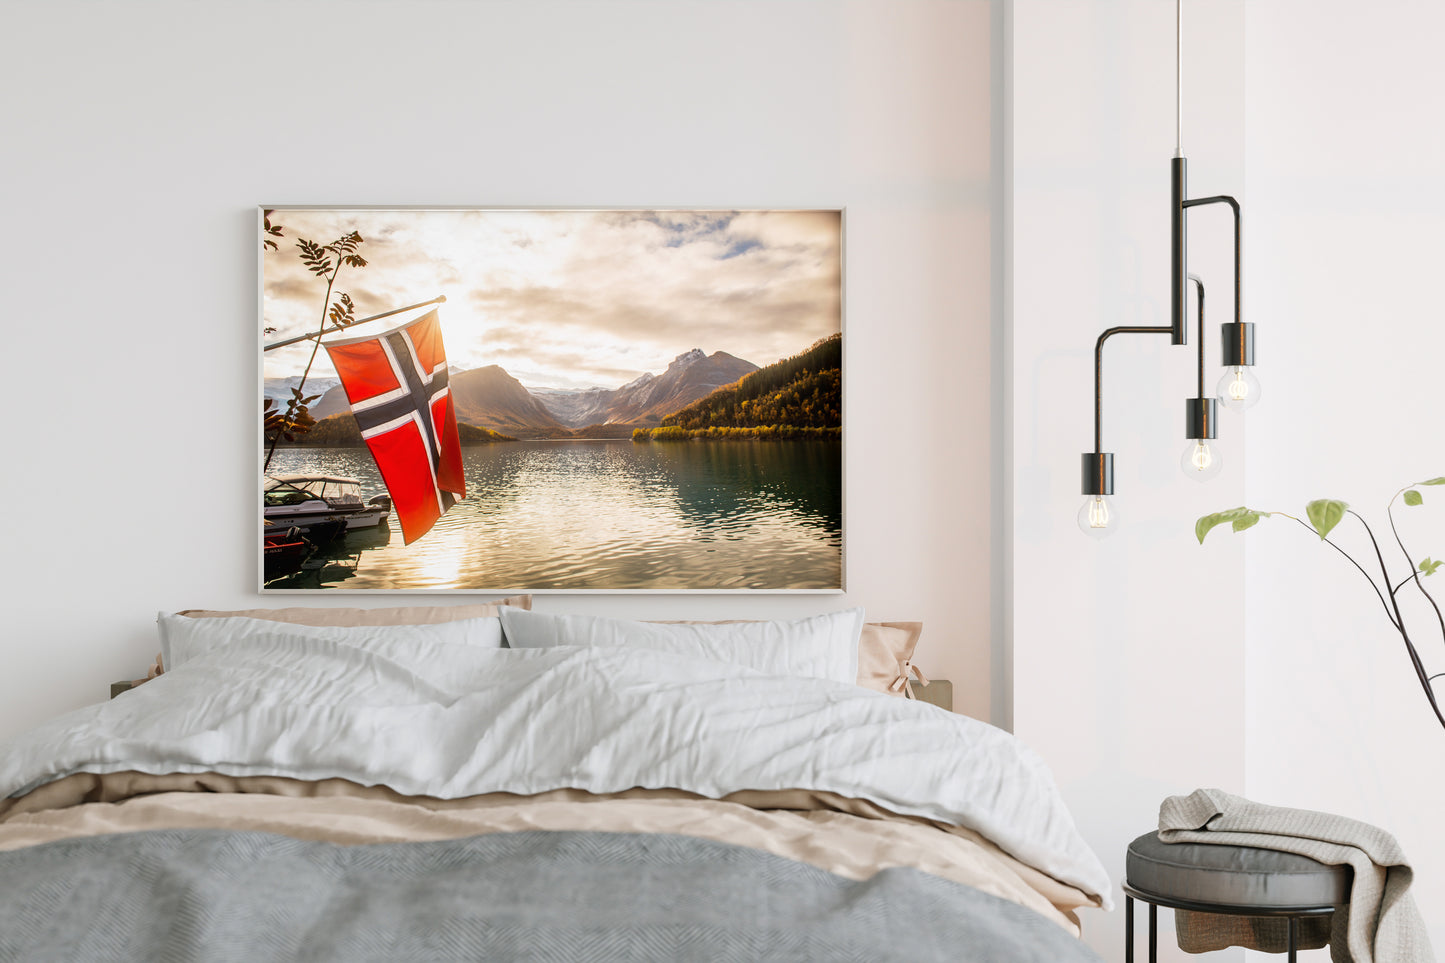 Leinwanddruck #41 "Fjord Landschaft Norwegen"